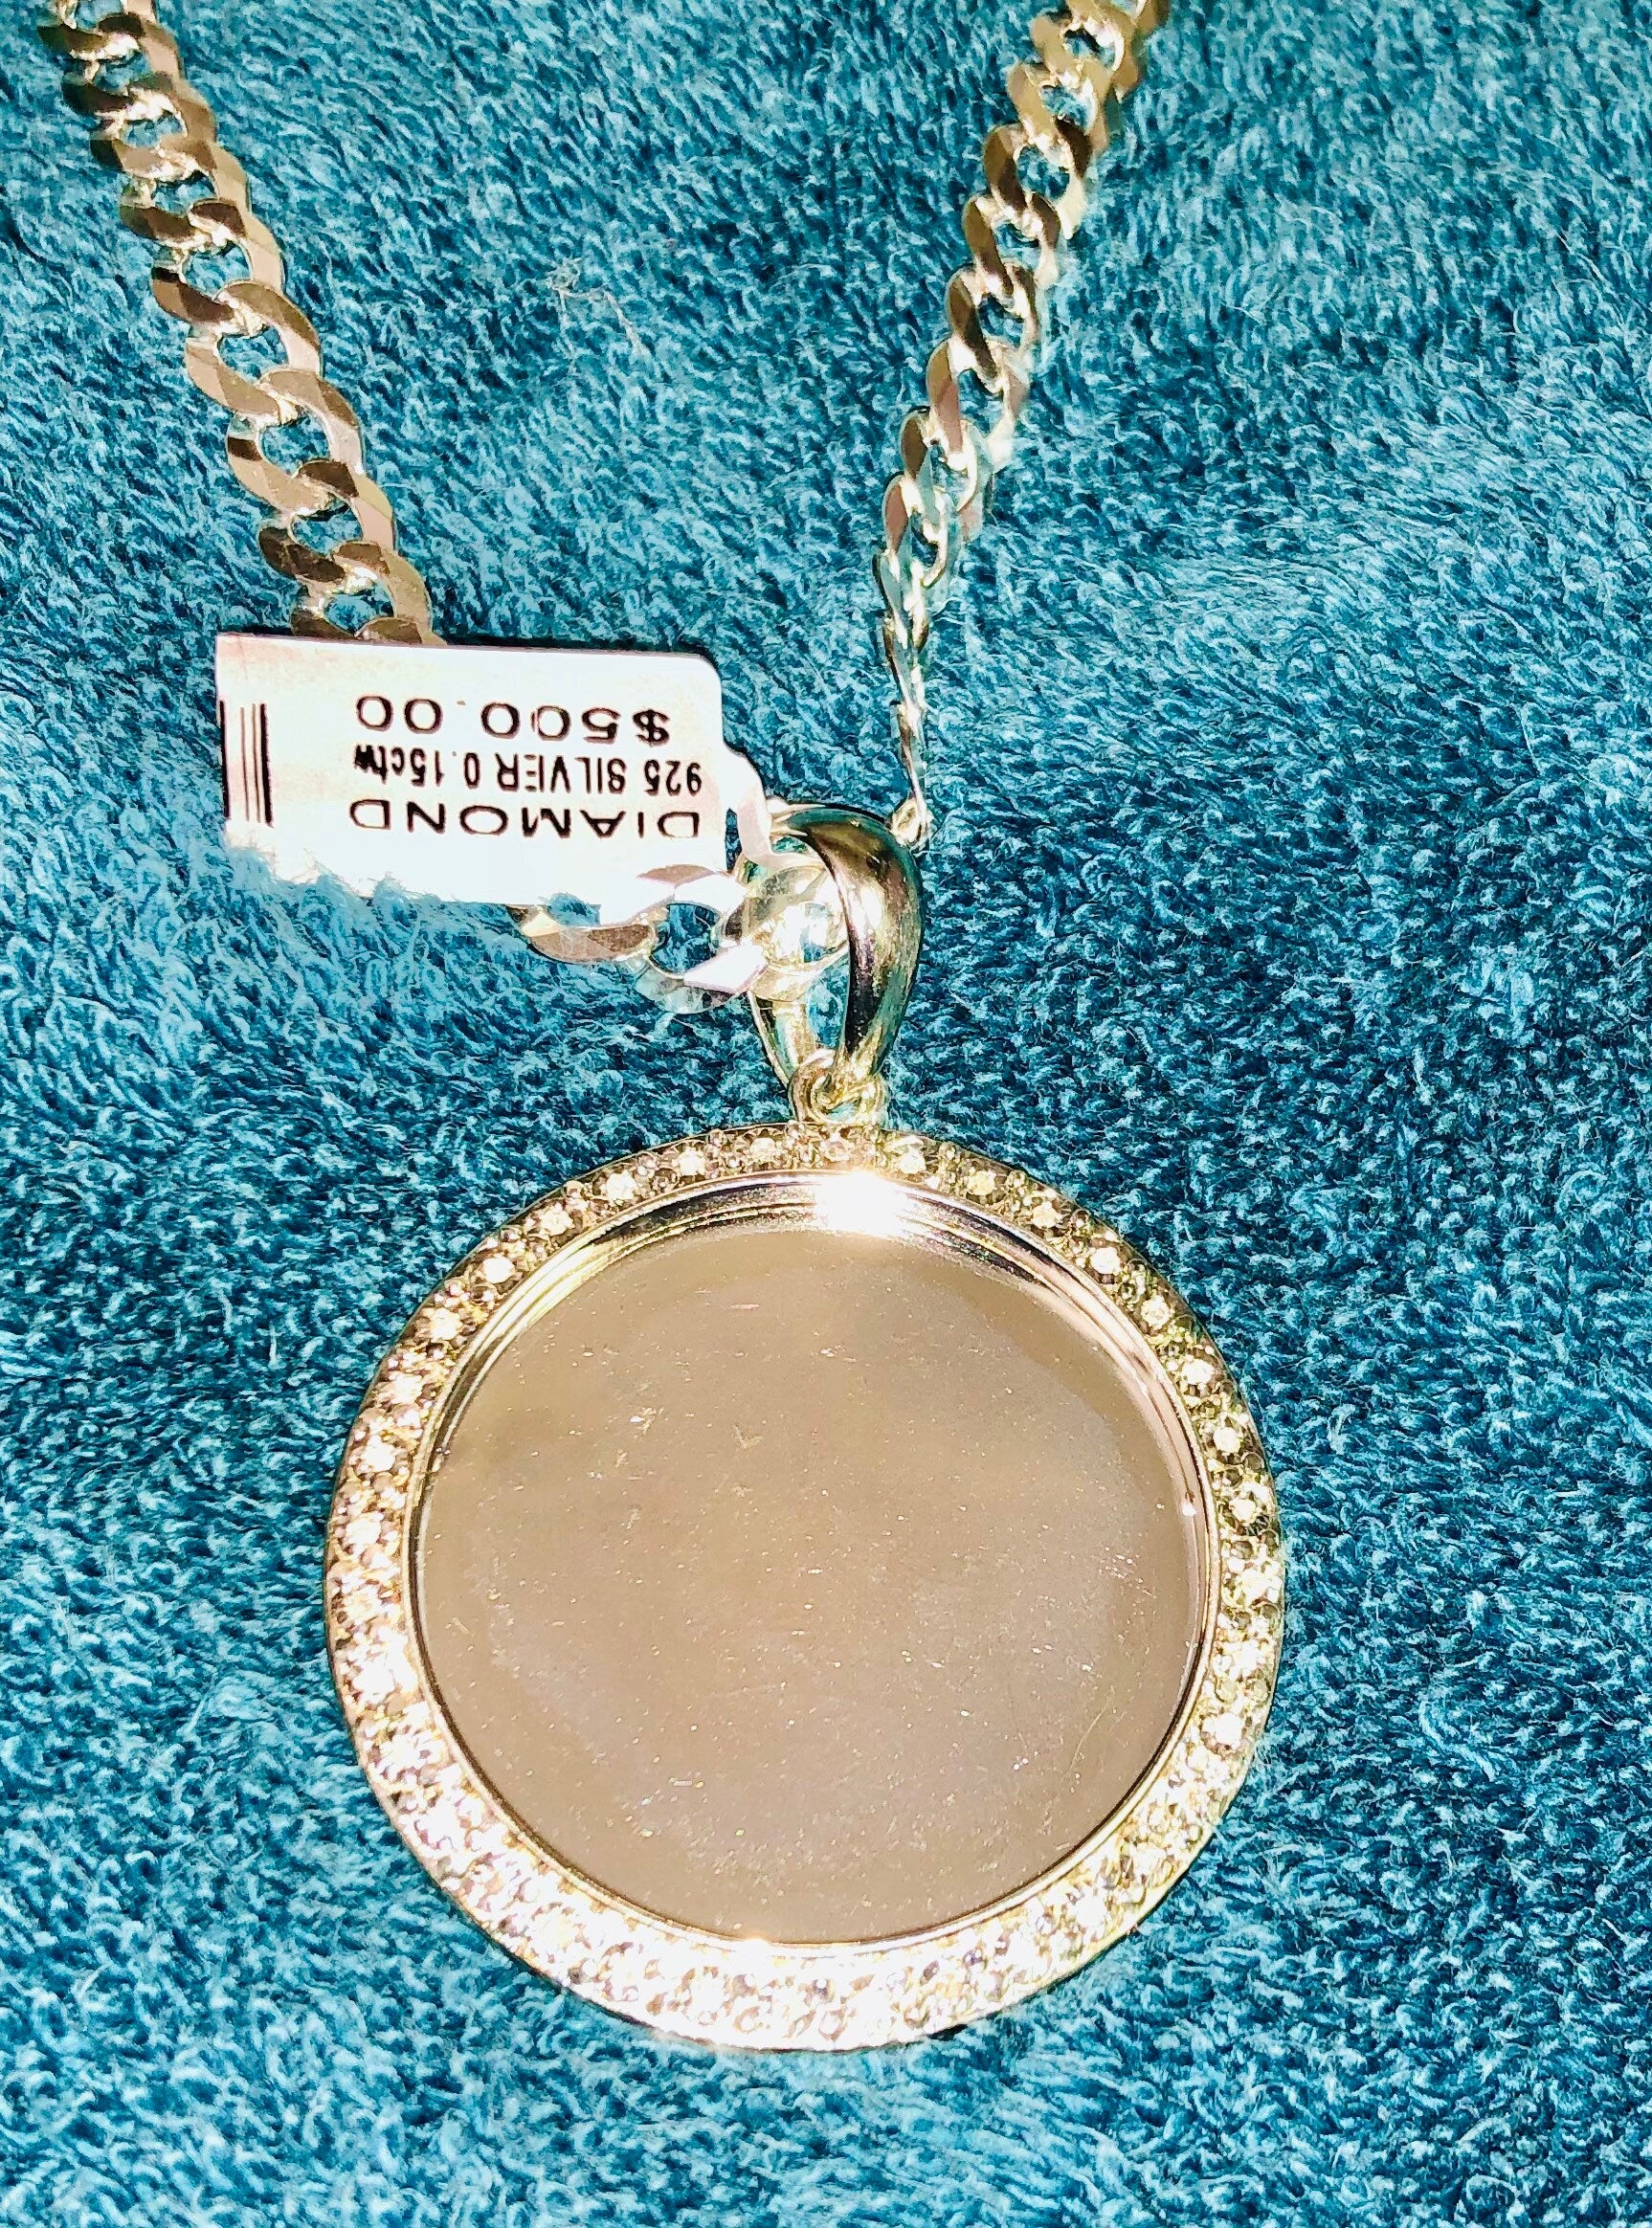 Diamond Memory Pendant Necklace | Custom Picture Pendant | Photo Pendant | In Loving Memory Pendant | Real Diamond Memory Charm, 10k Vermeil